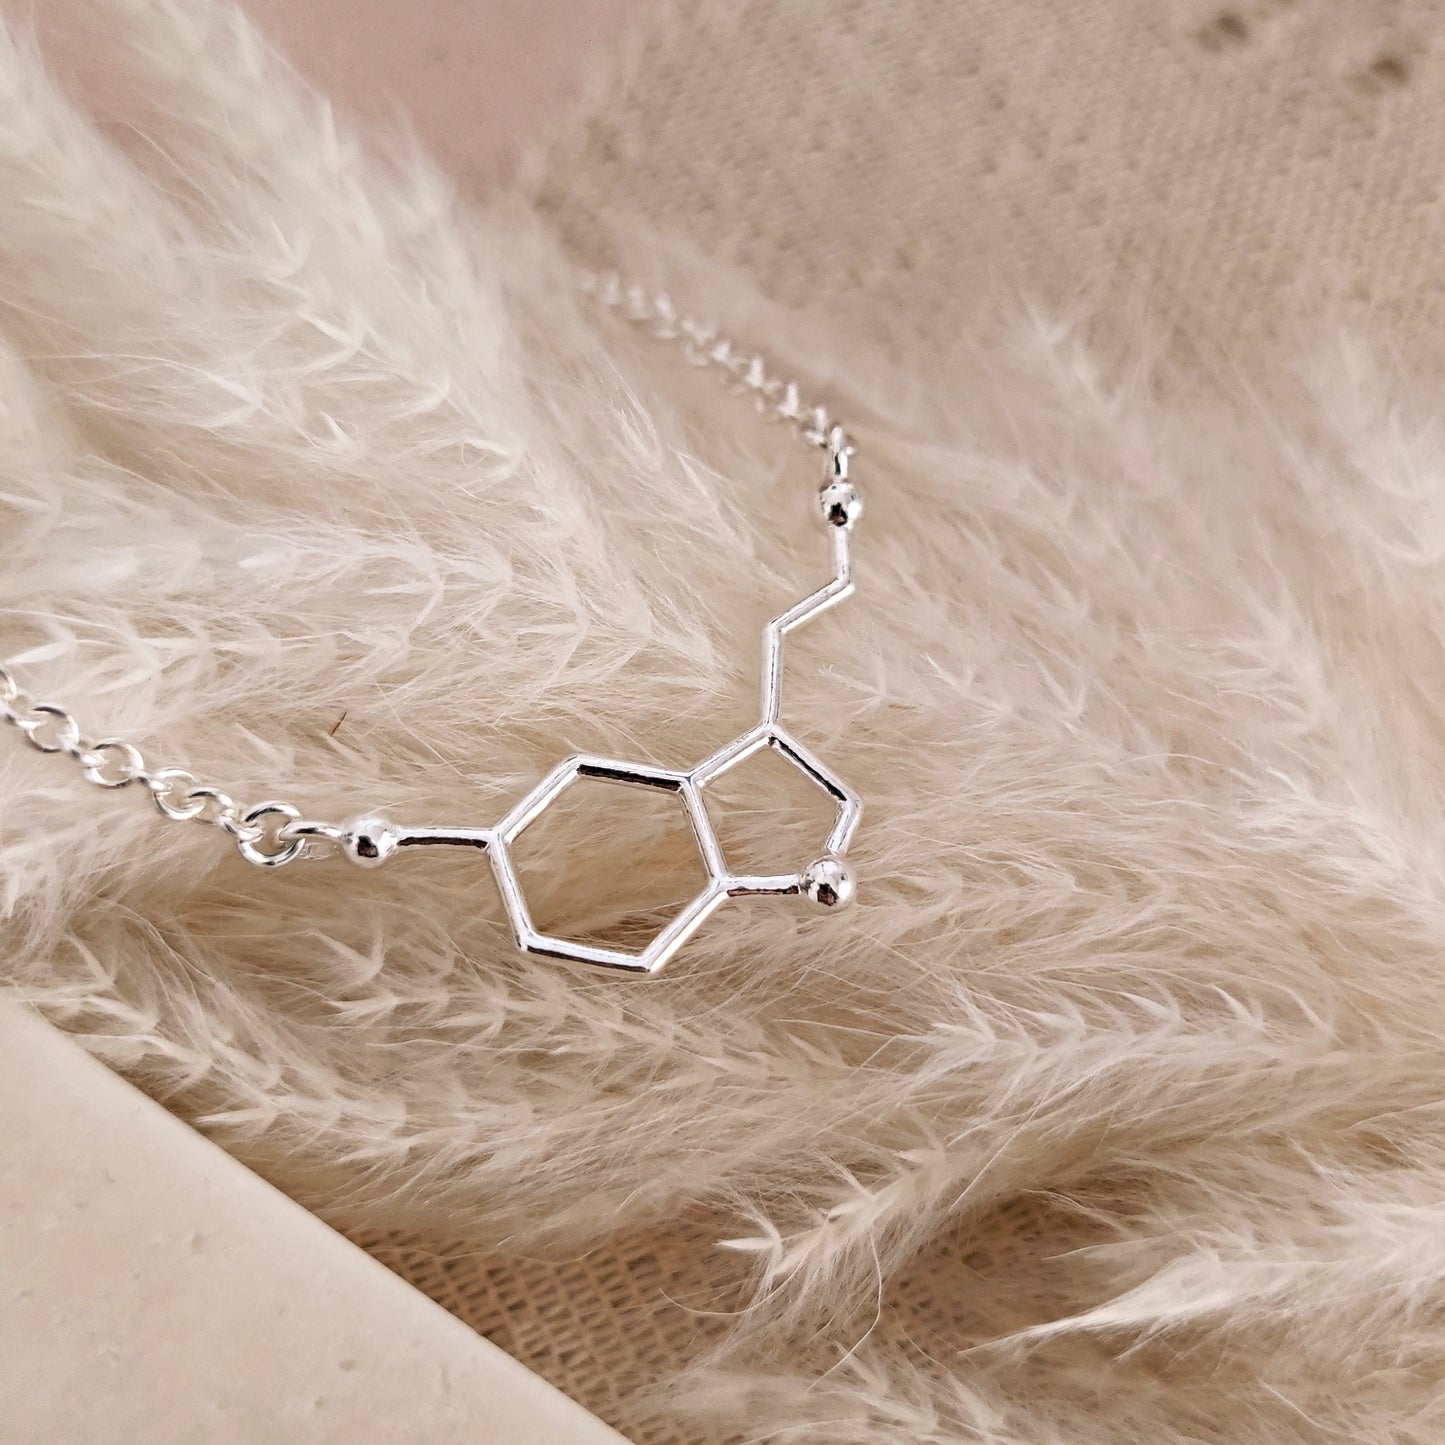 Collana Molecola Serotonina, Molecola della Felicità